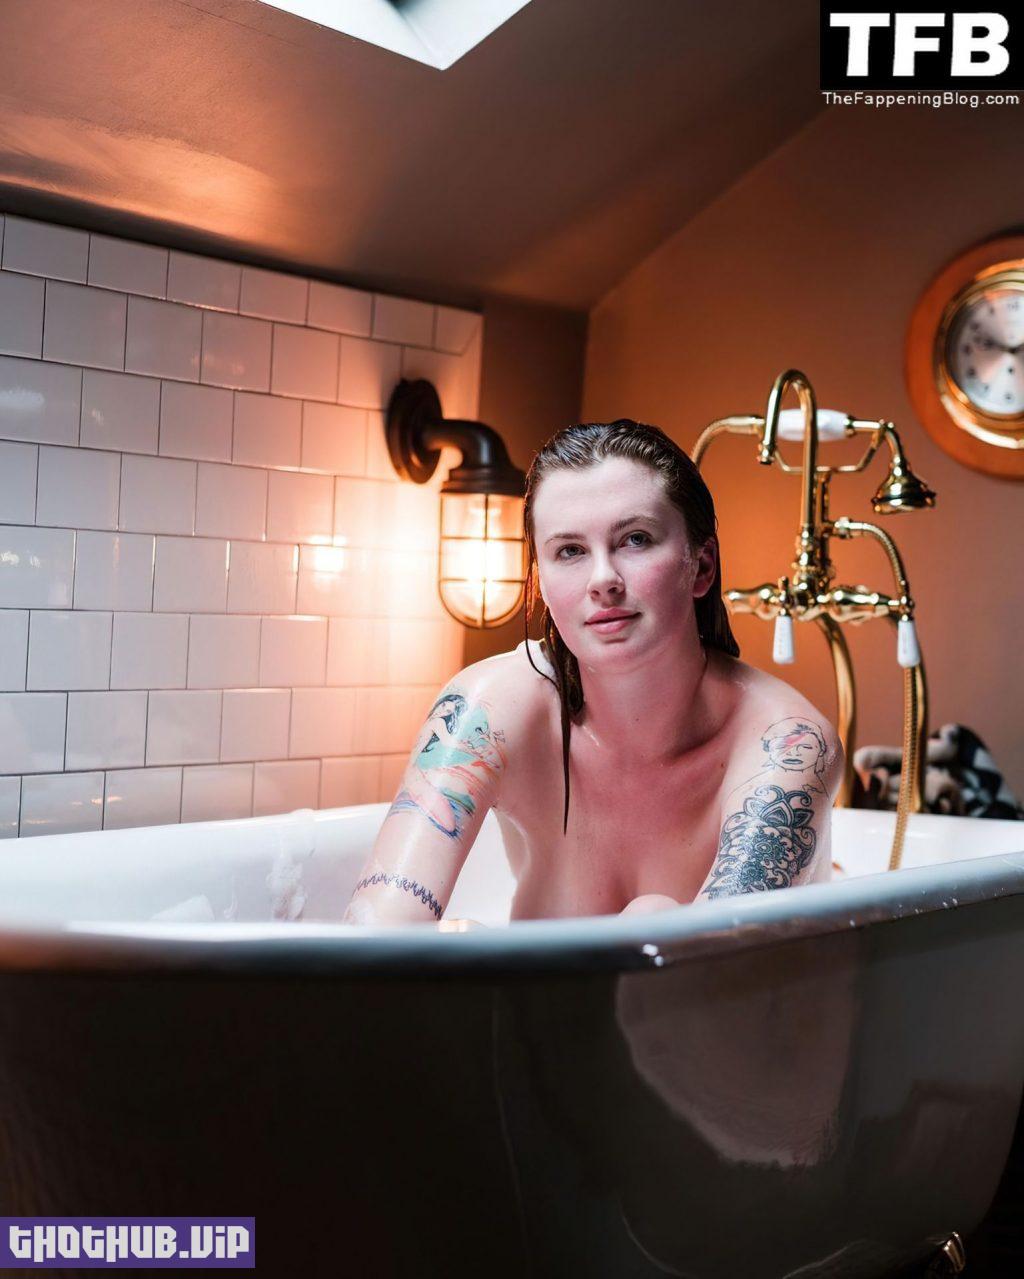 Best Ireland Baldwin Poses Naked In The Bathtub